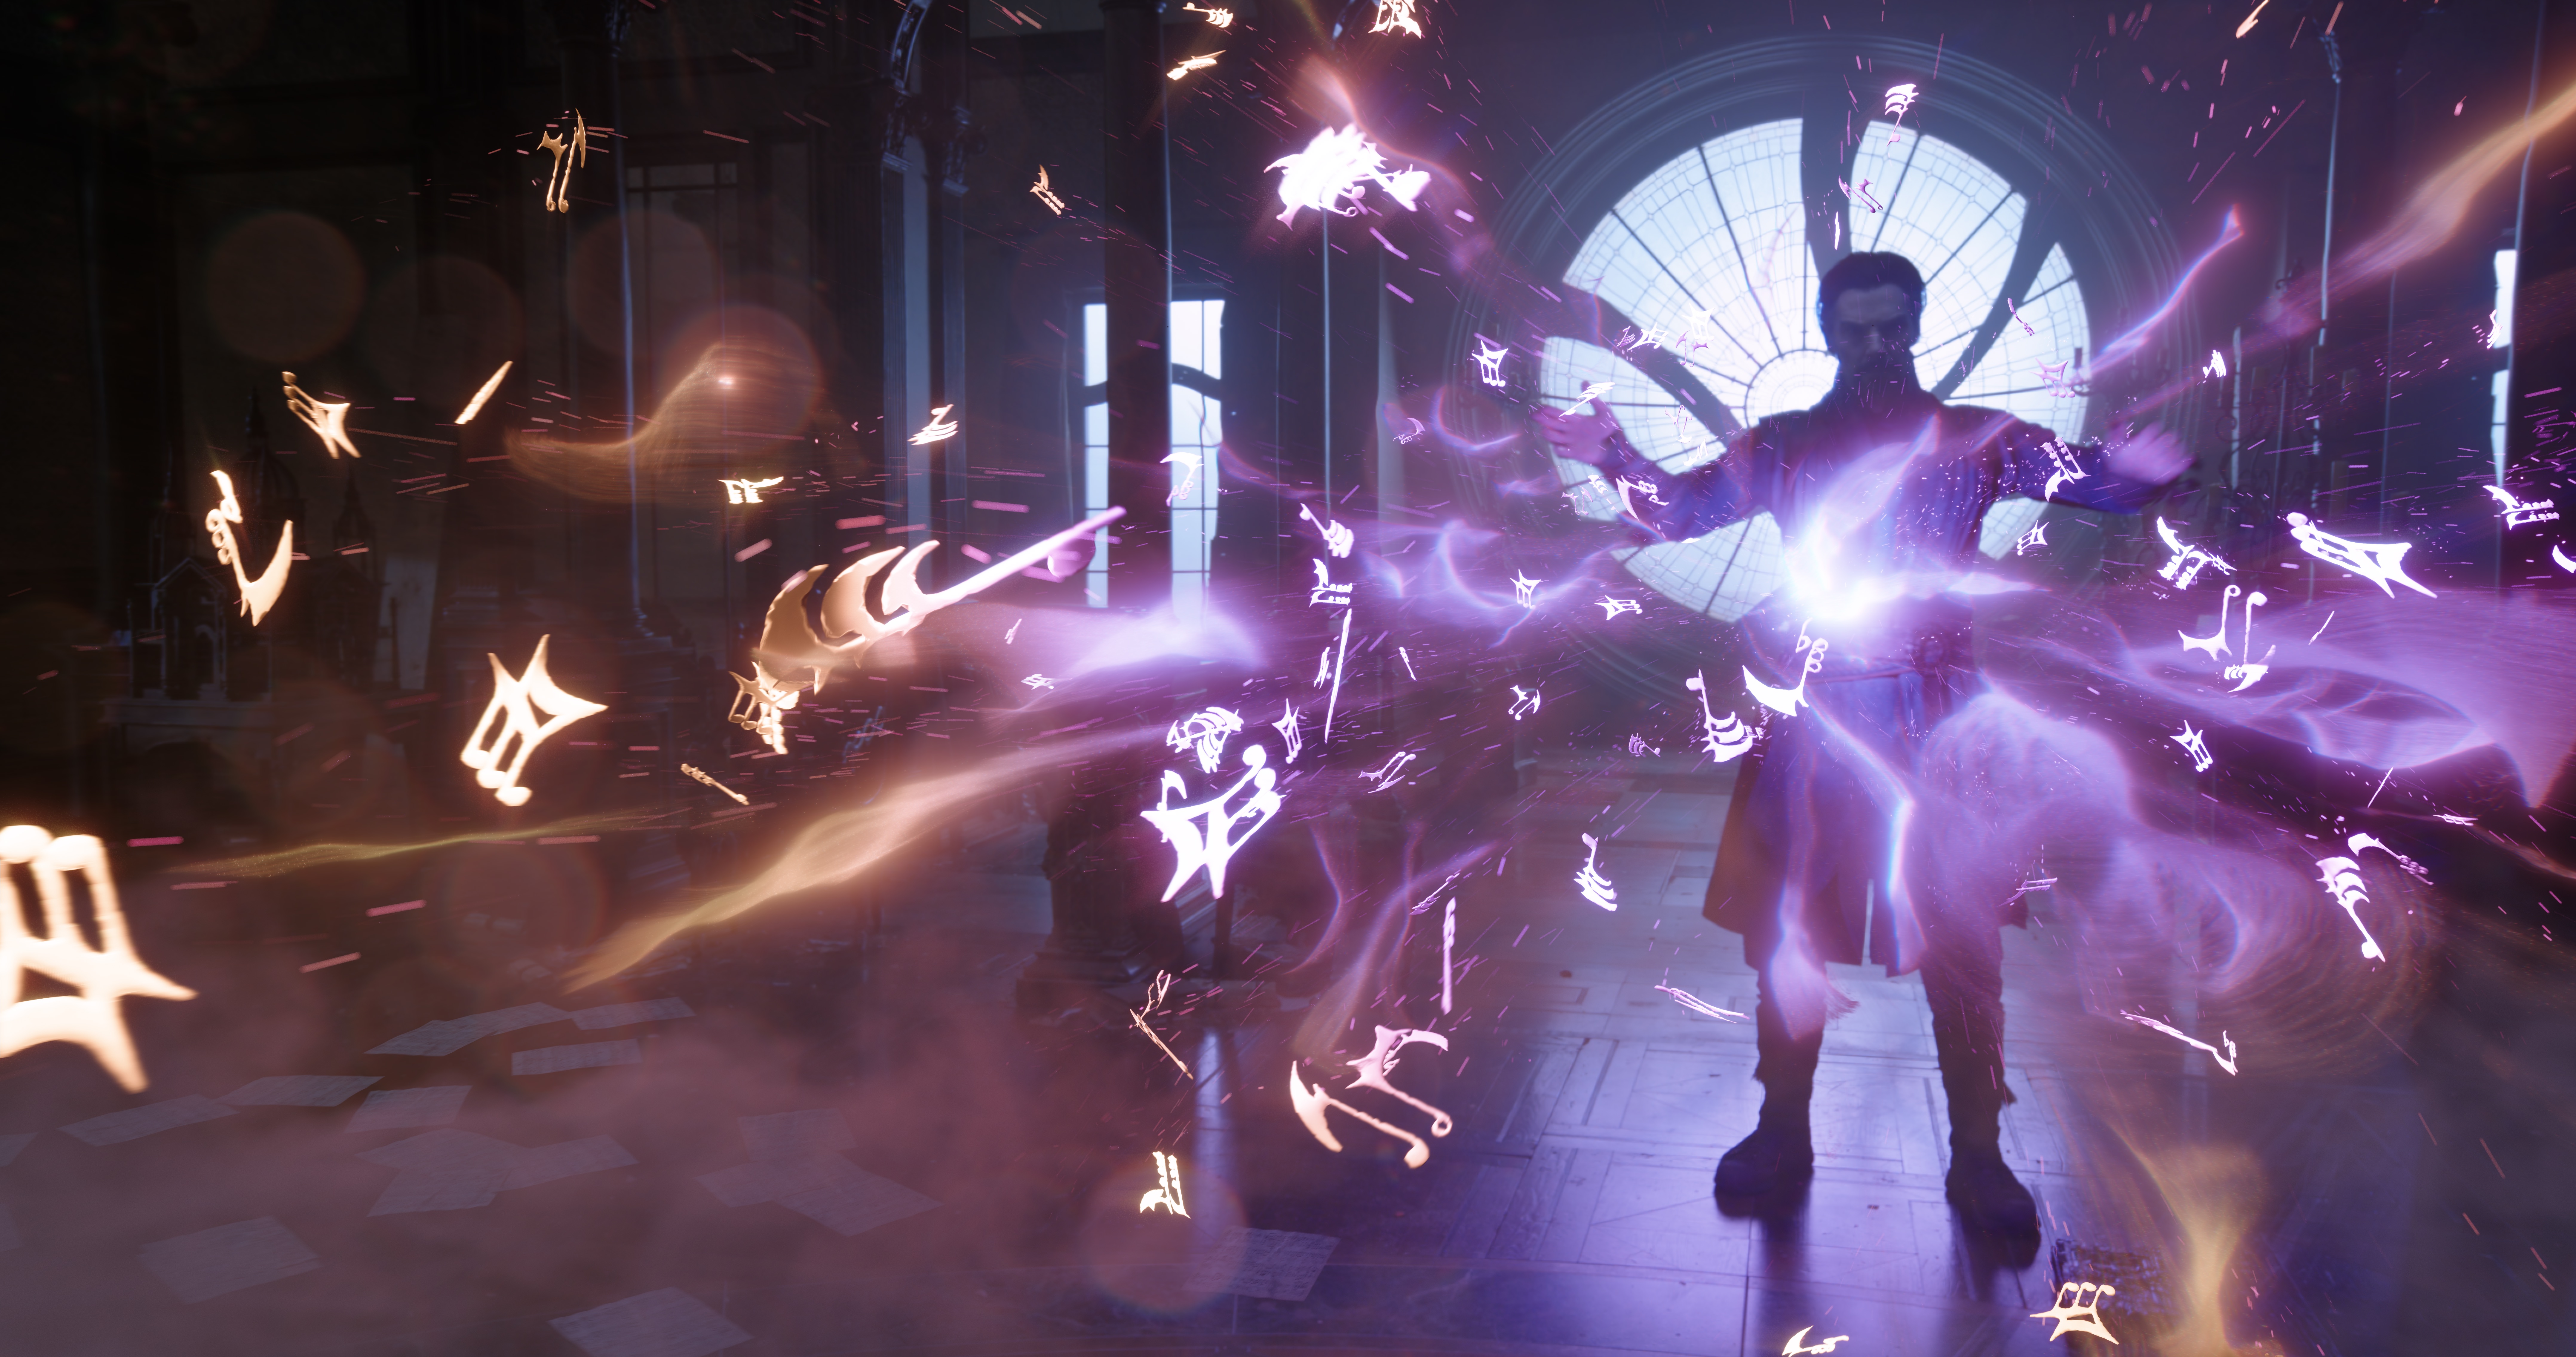 Doctor Strange casts a spell, sending dozens of purple gliphs shooting towards the camera.